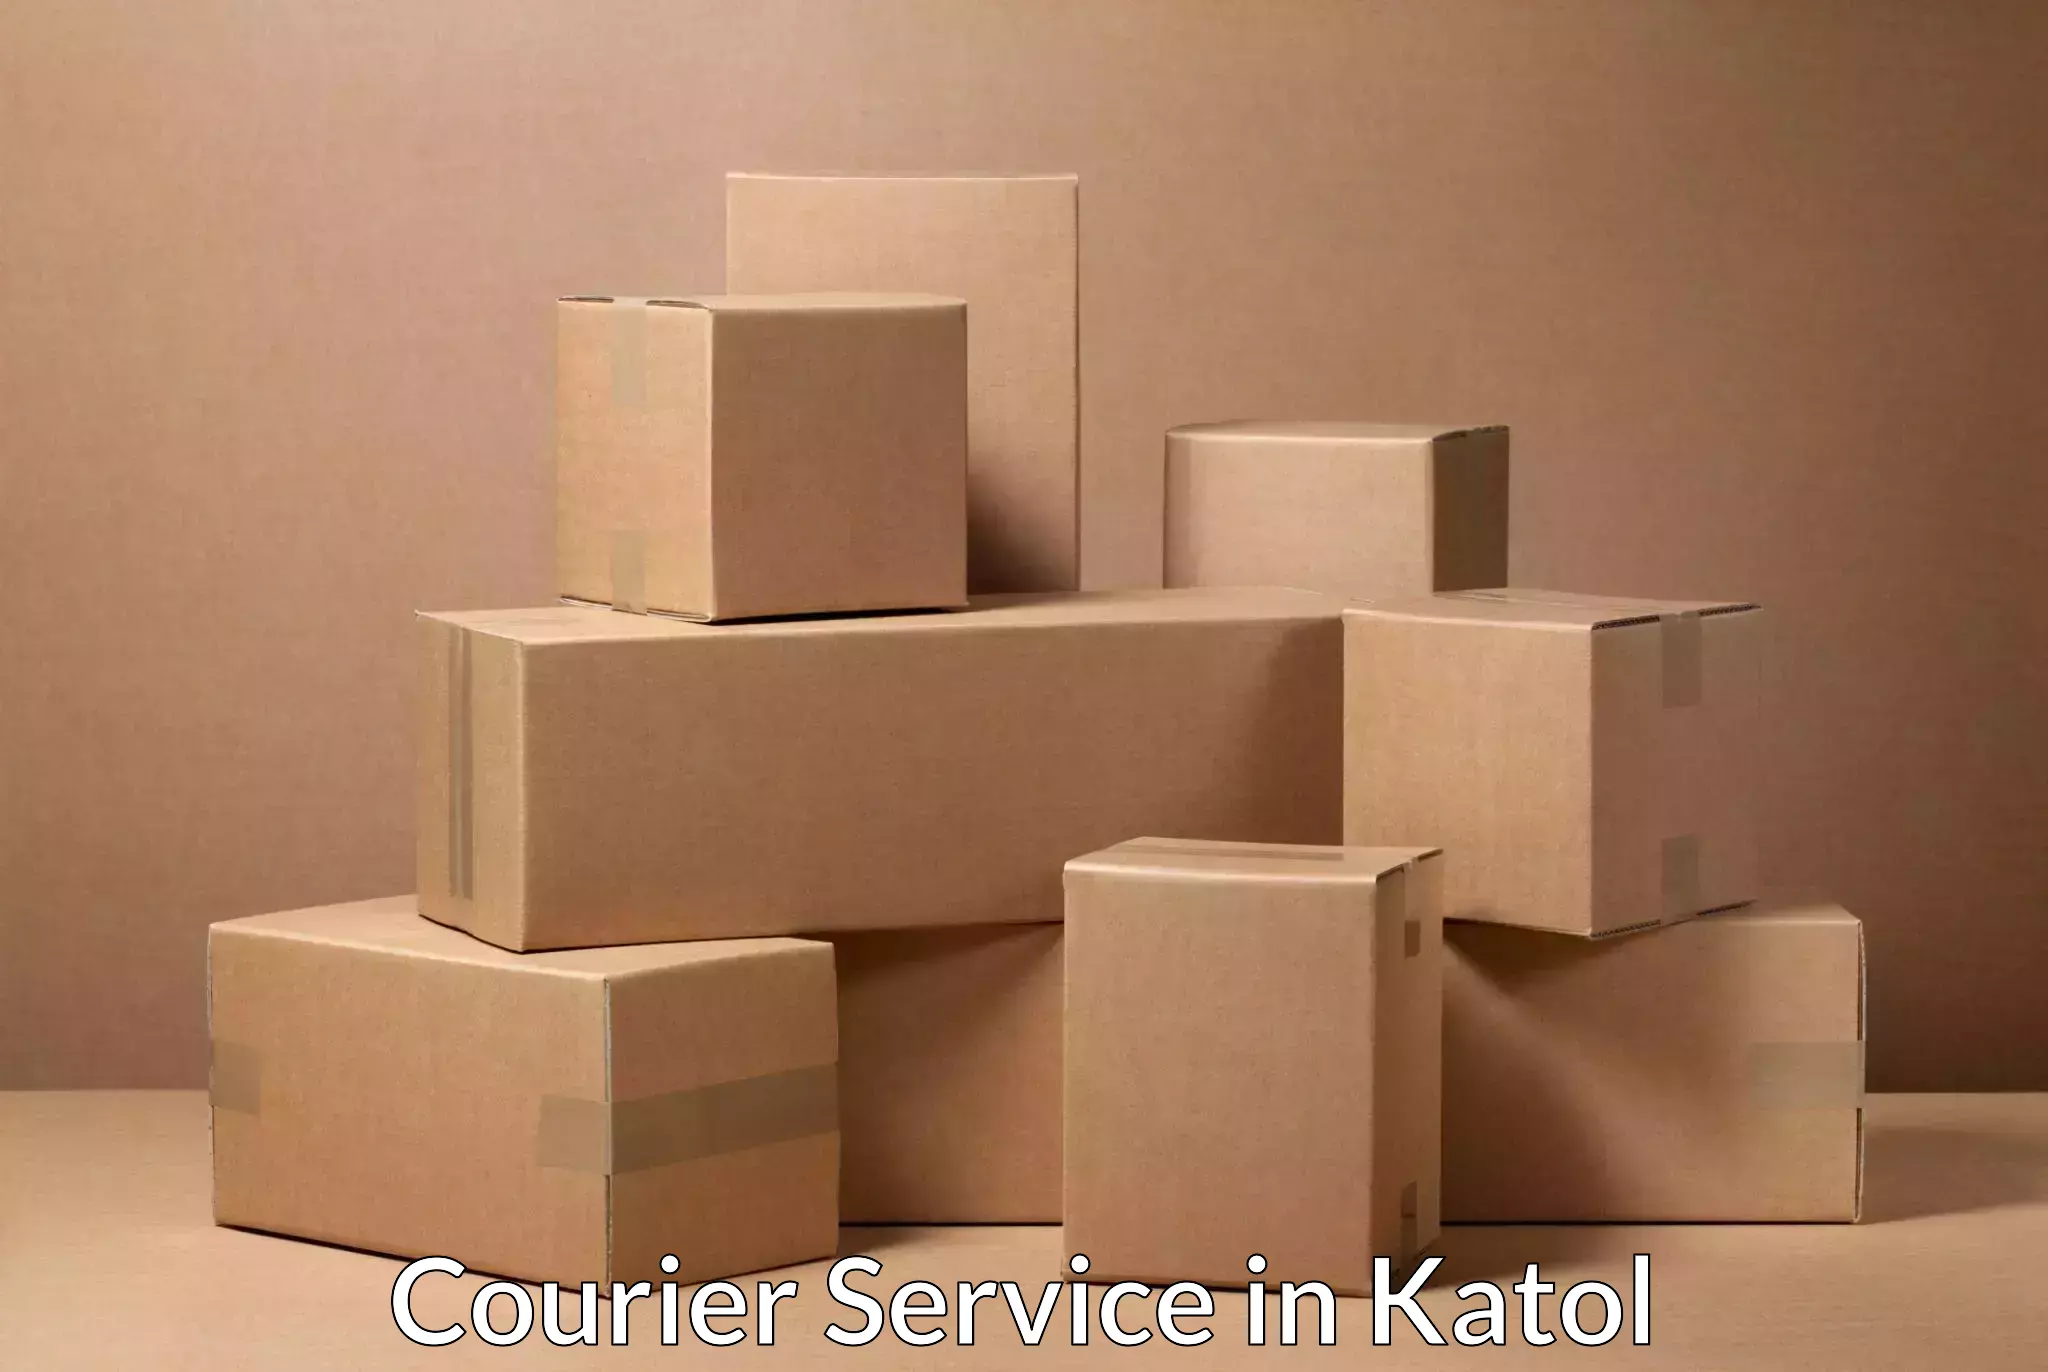 Lightweight parcel options in Katol